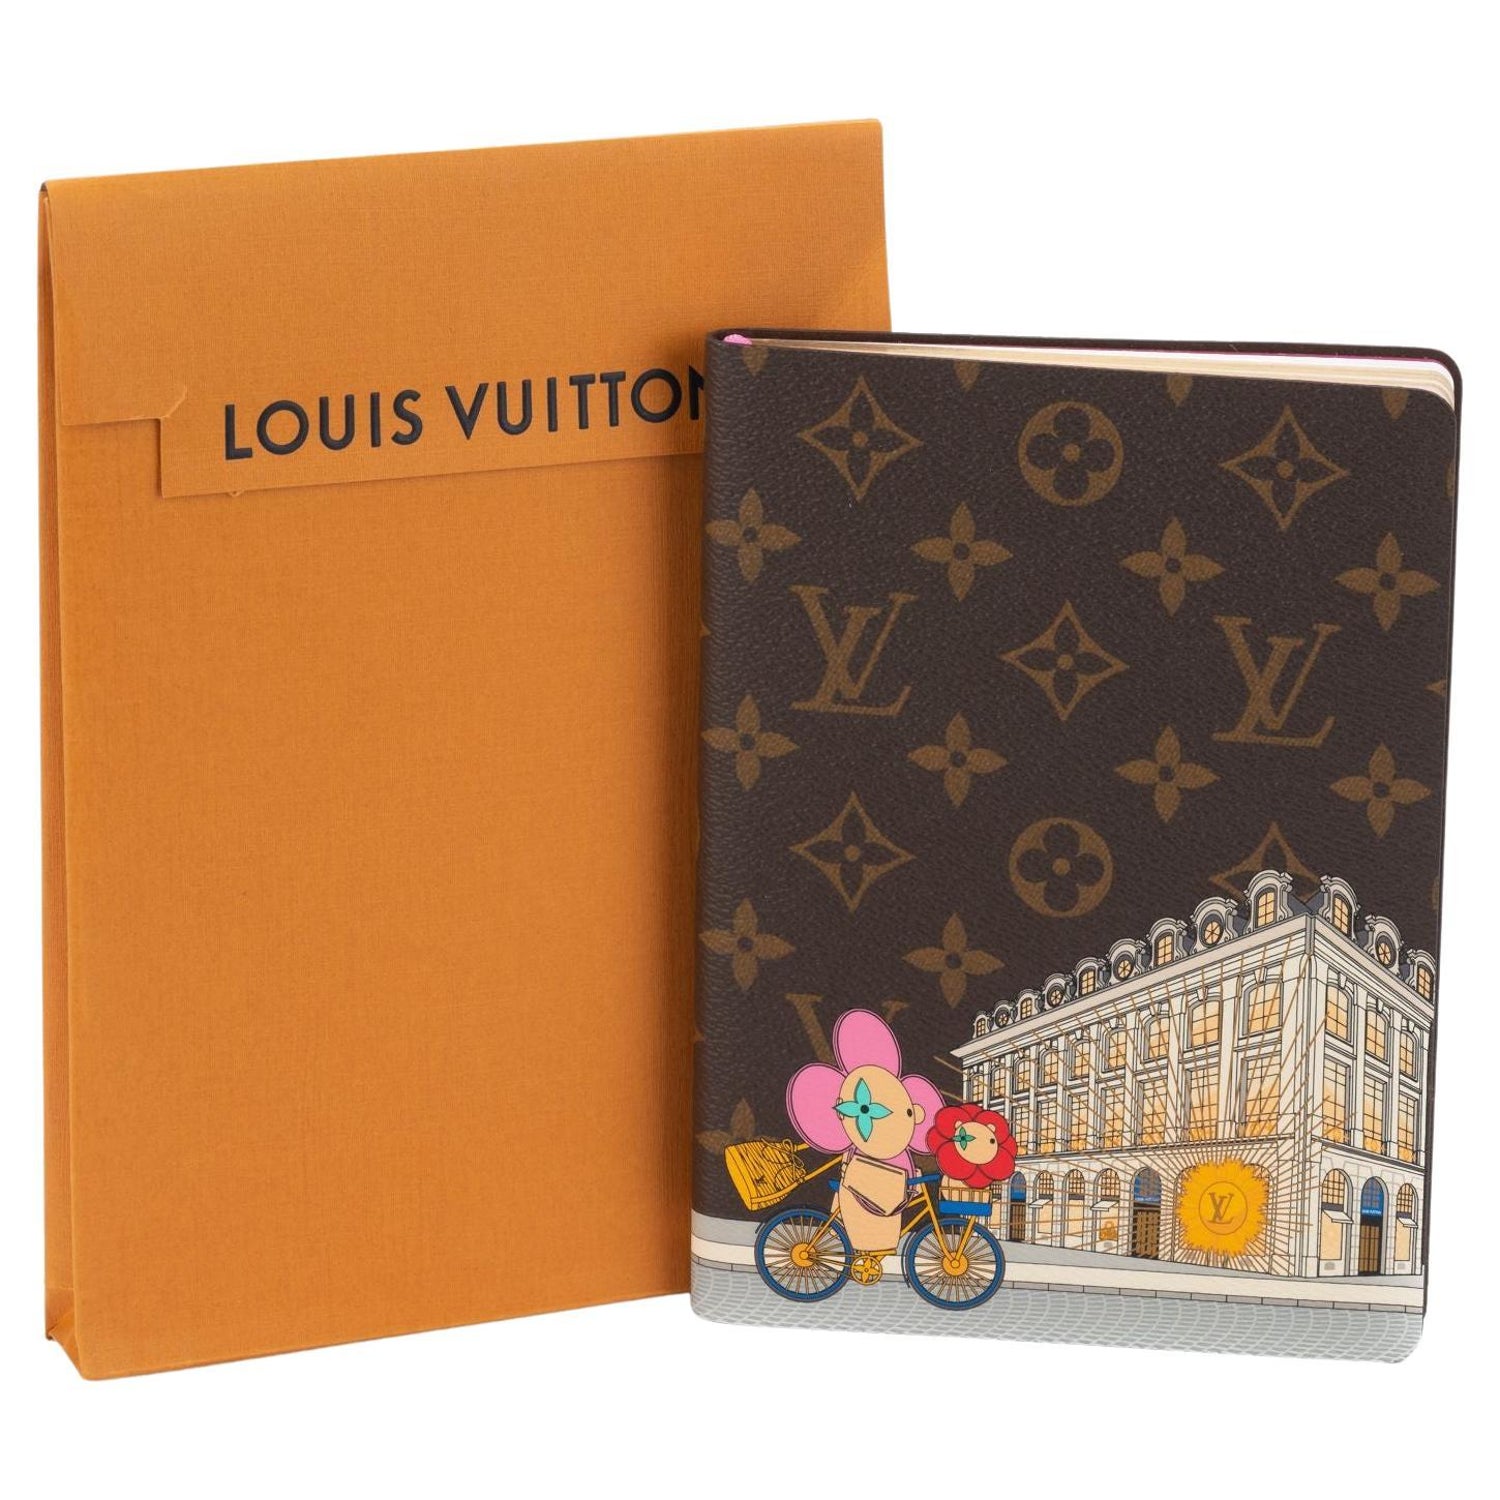 Sold at Auction: LOUIS VUITTON ORANGE EPI LEATHER AGENDA COVER